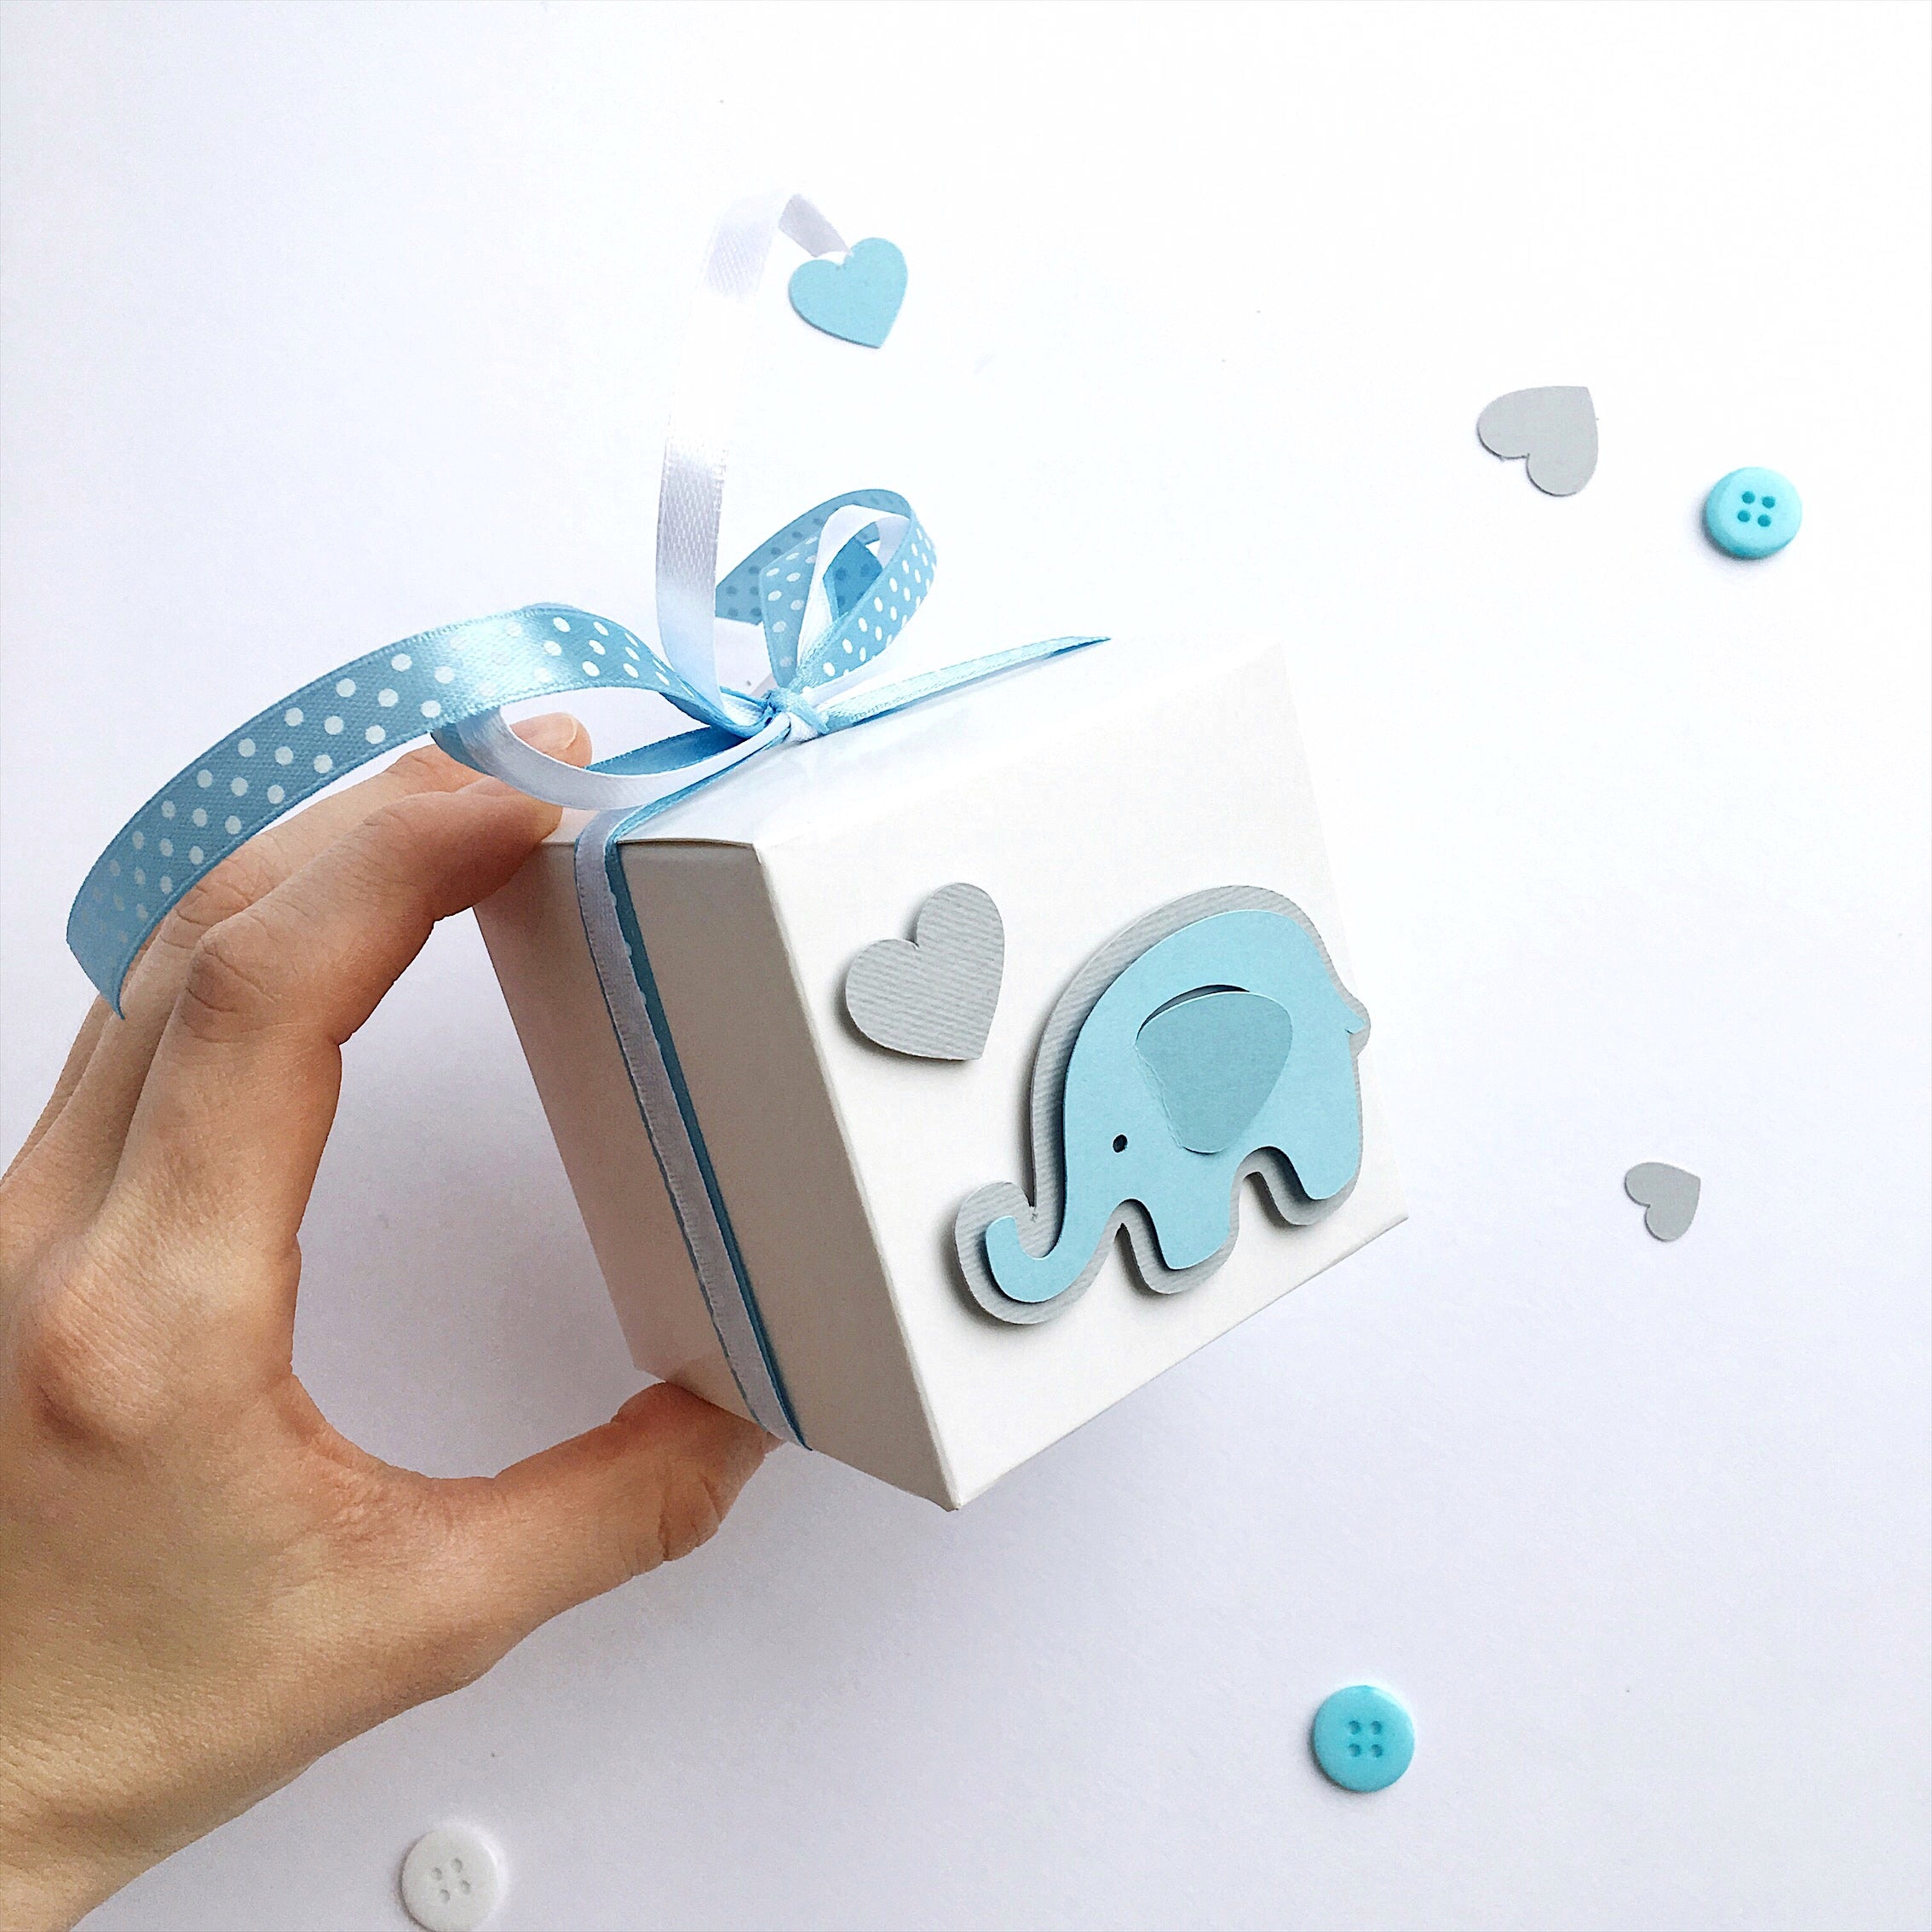 Elephant Favor Boxes Elephant Themed Baby Shower Decorations Elephant 1st Birthday Gift Boxes Blue Grey Elephant 